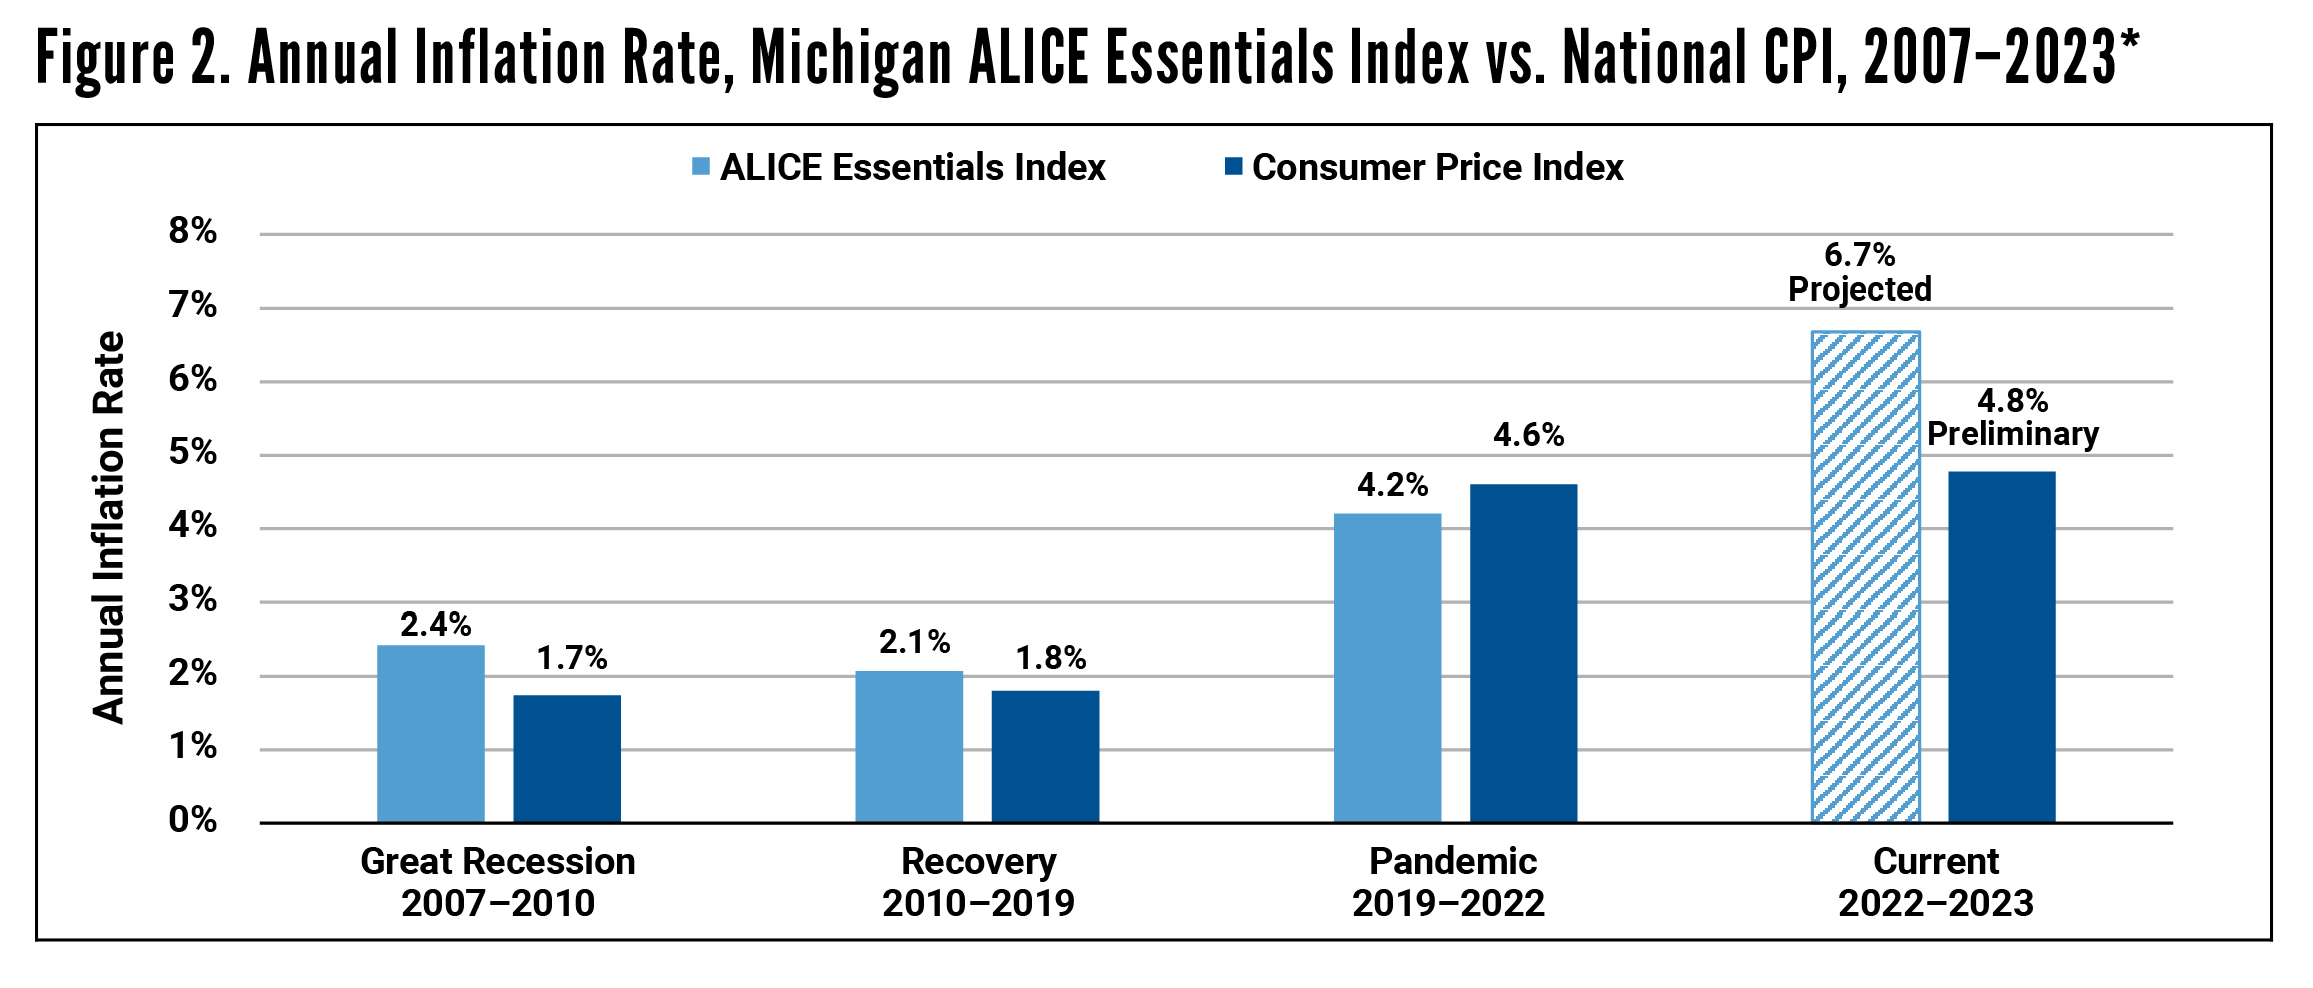 Annual Inflation Rate, Michigan ALICE Essentials Index vs National CPI